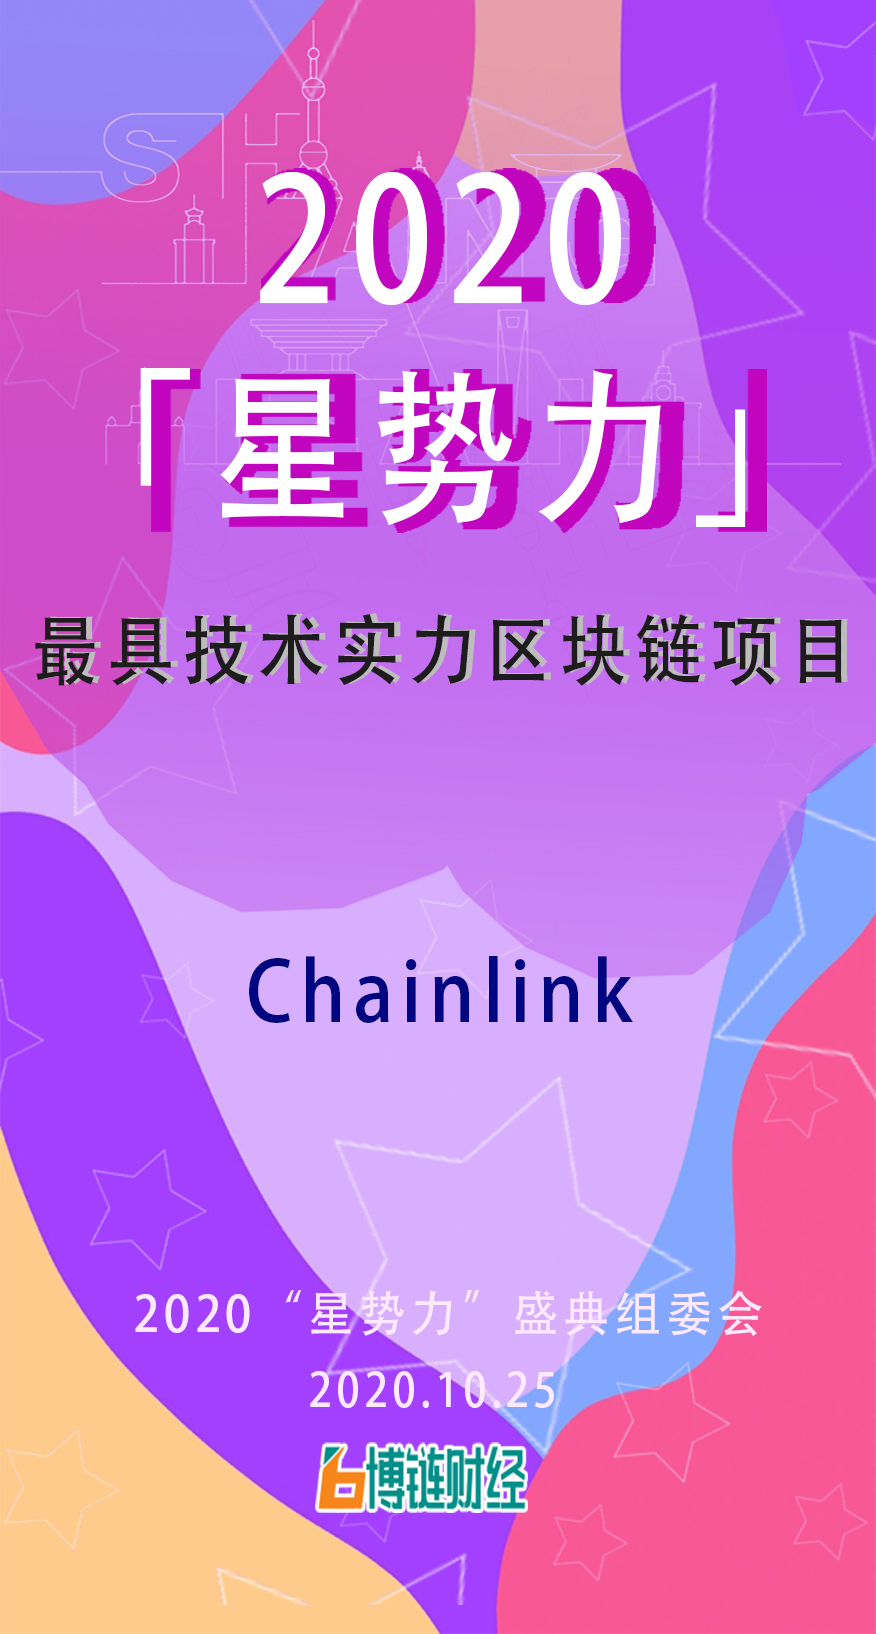 Chainlink.jpg